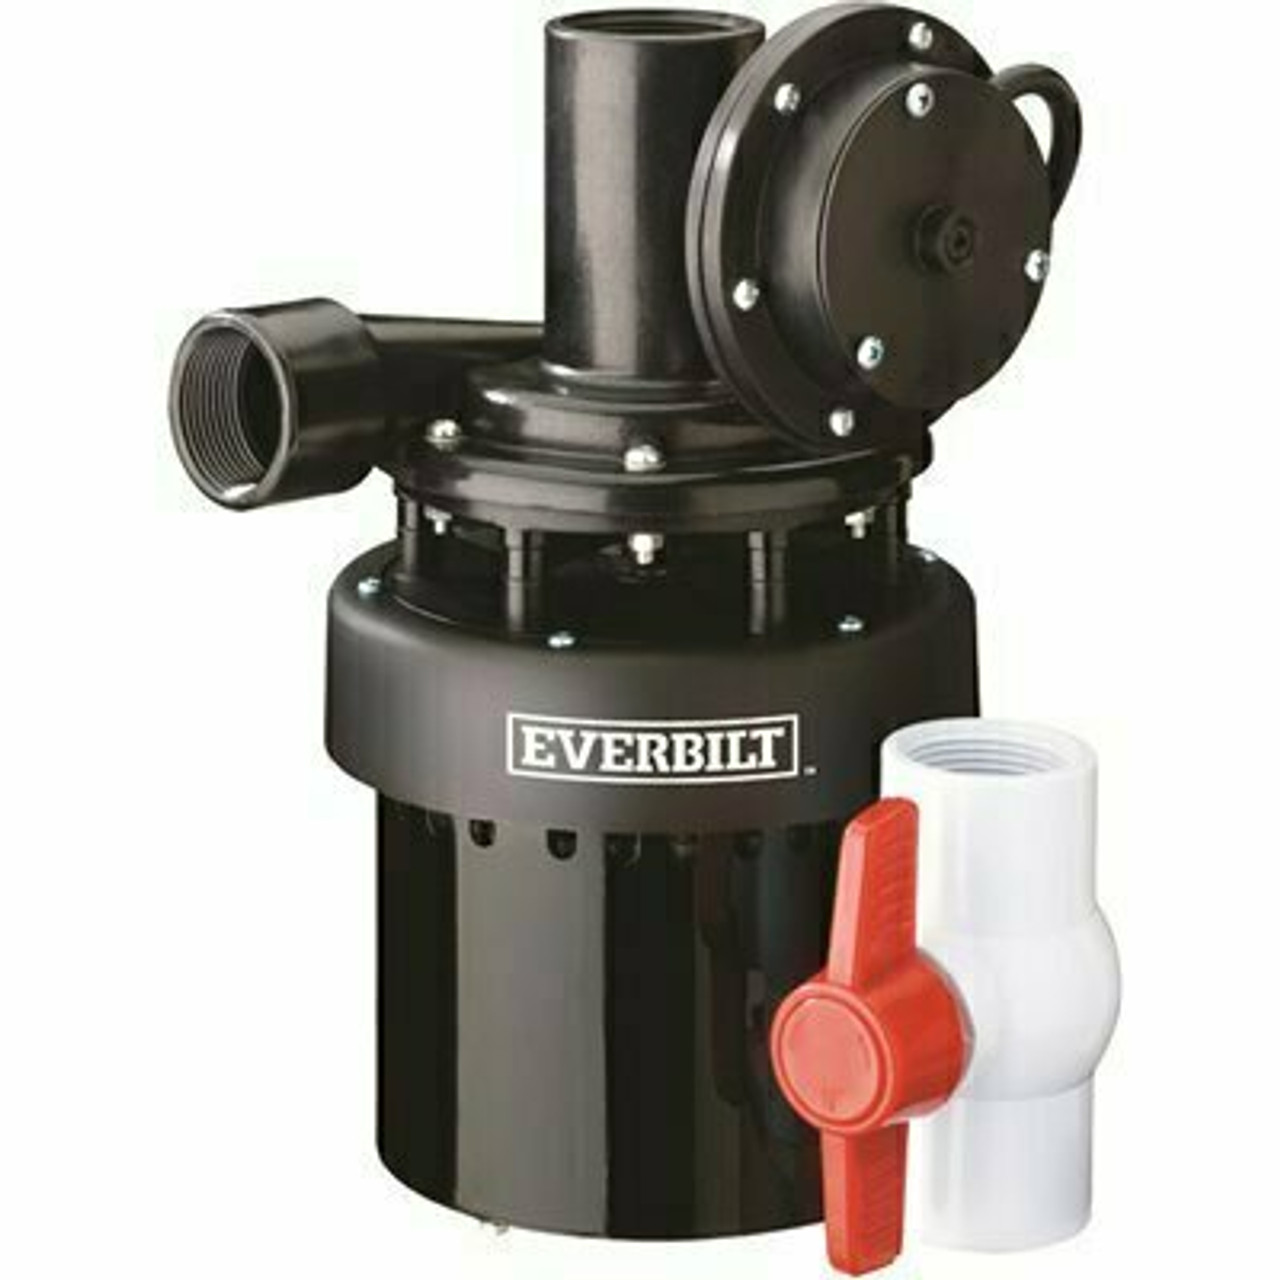 Everbilt 1/3 Hp Utility Sink Pump